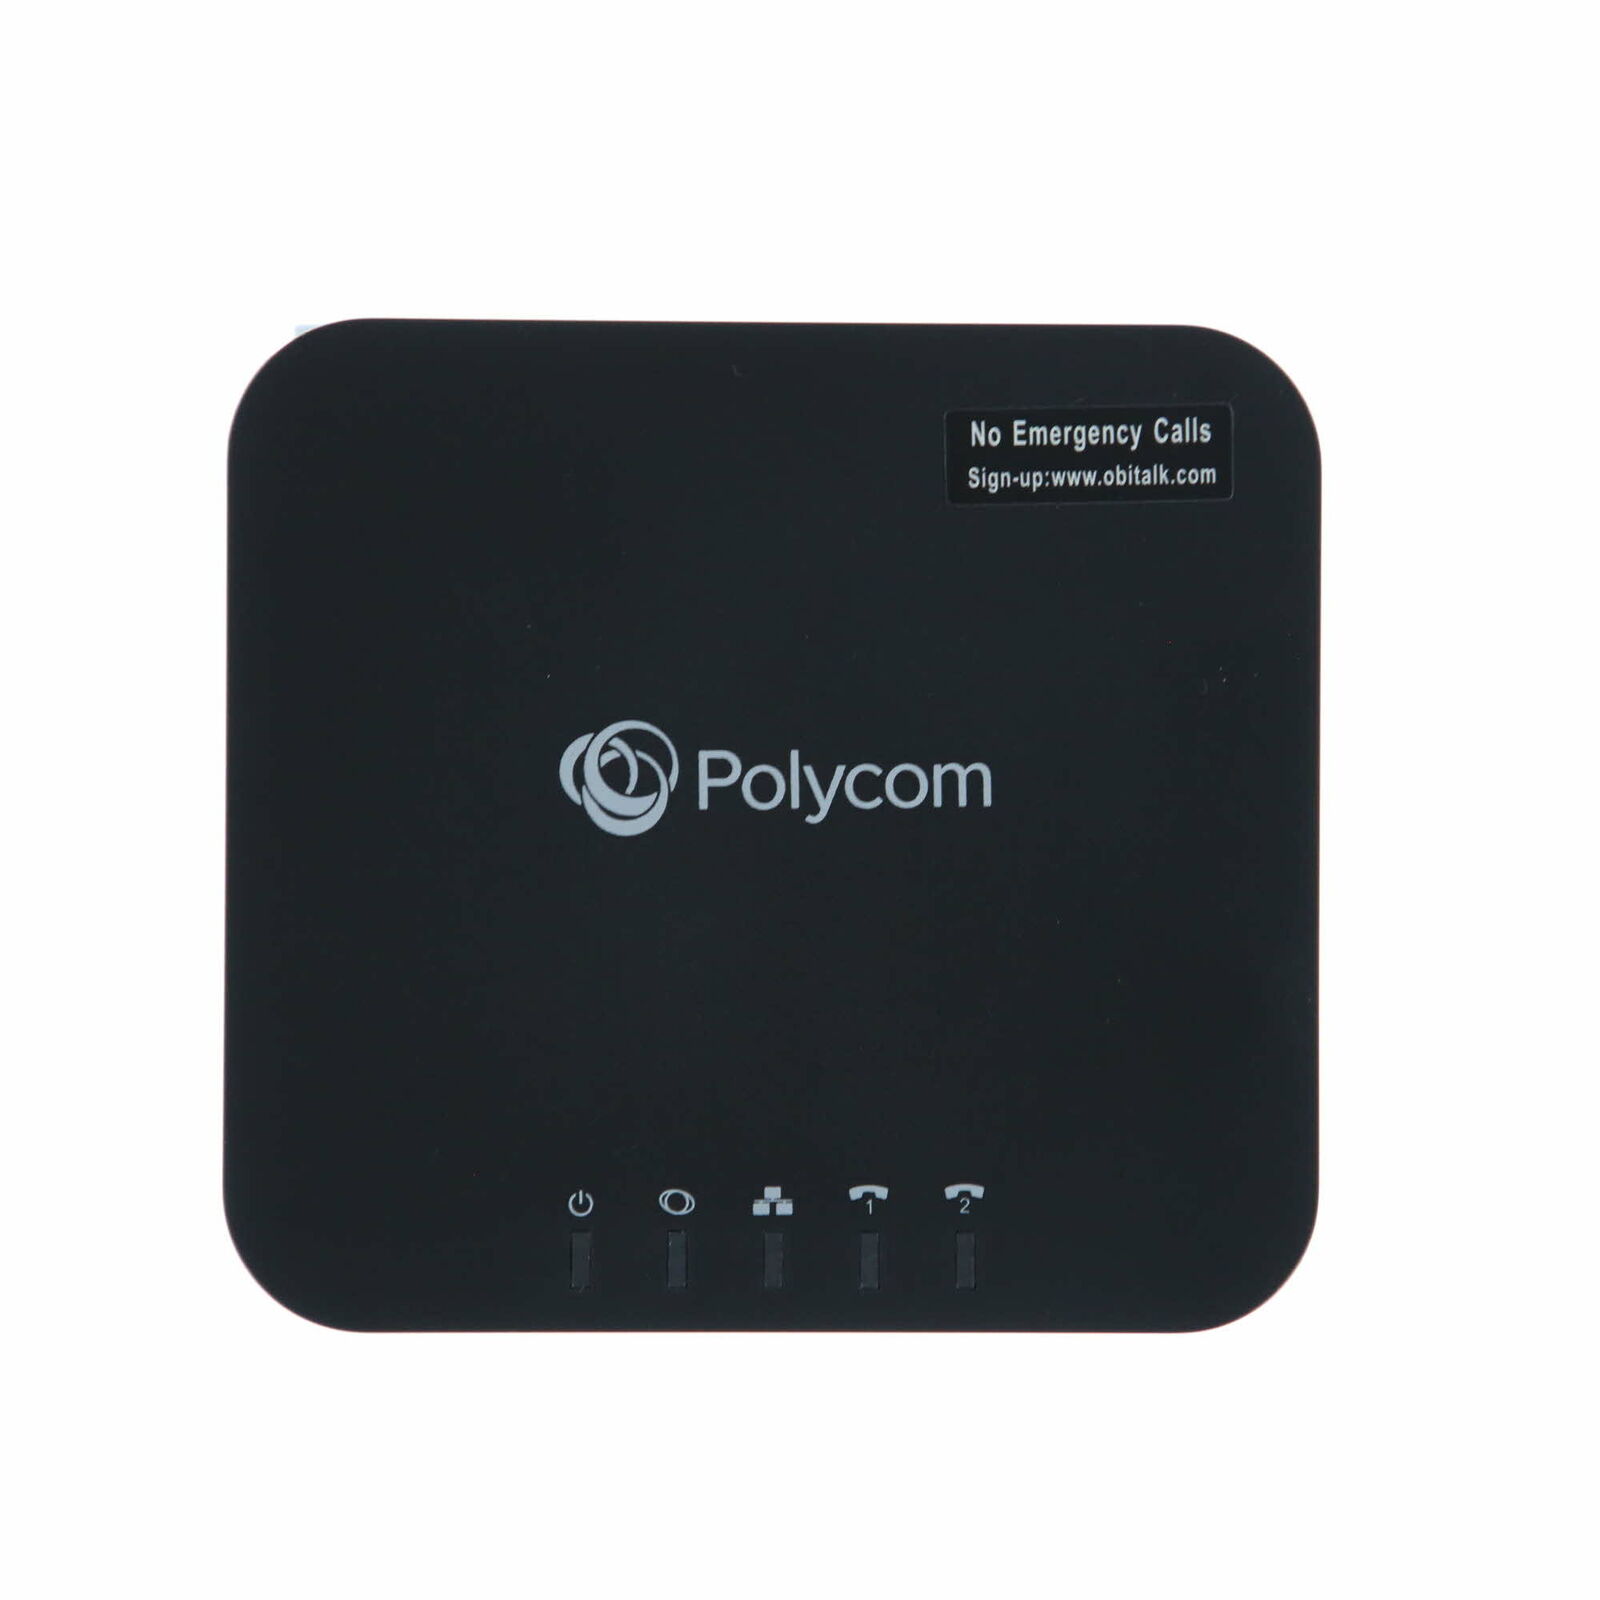 Polycom Obihai OBi202 2-Port VoIP Phone Adapter - Google Voice & Fax Support NEW